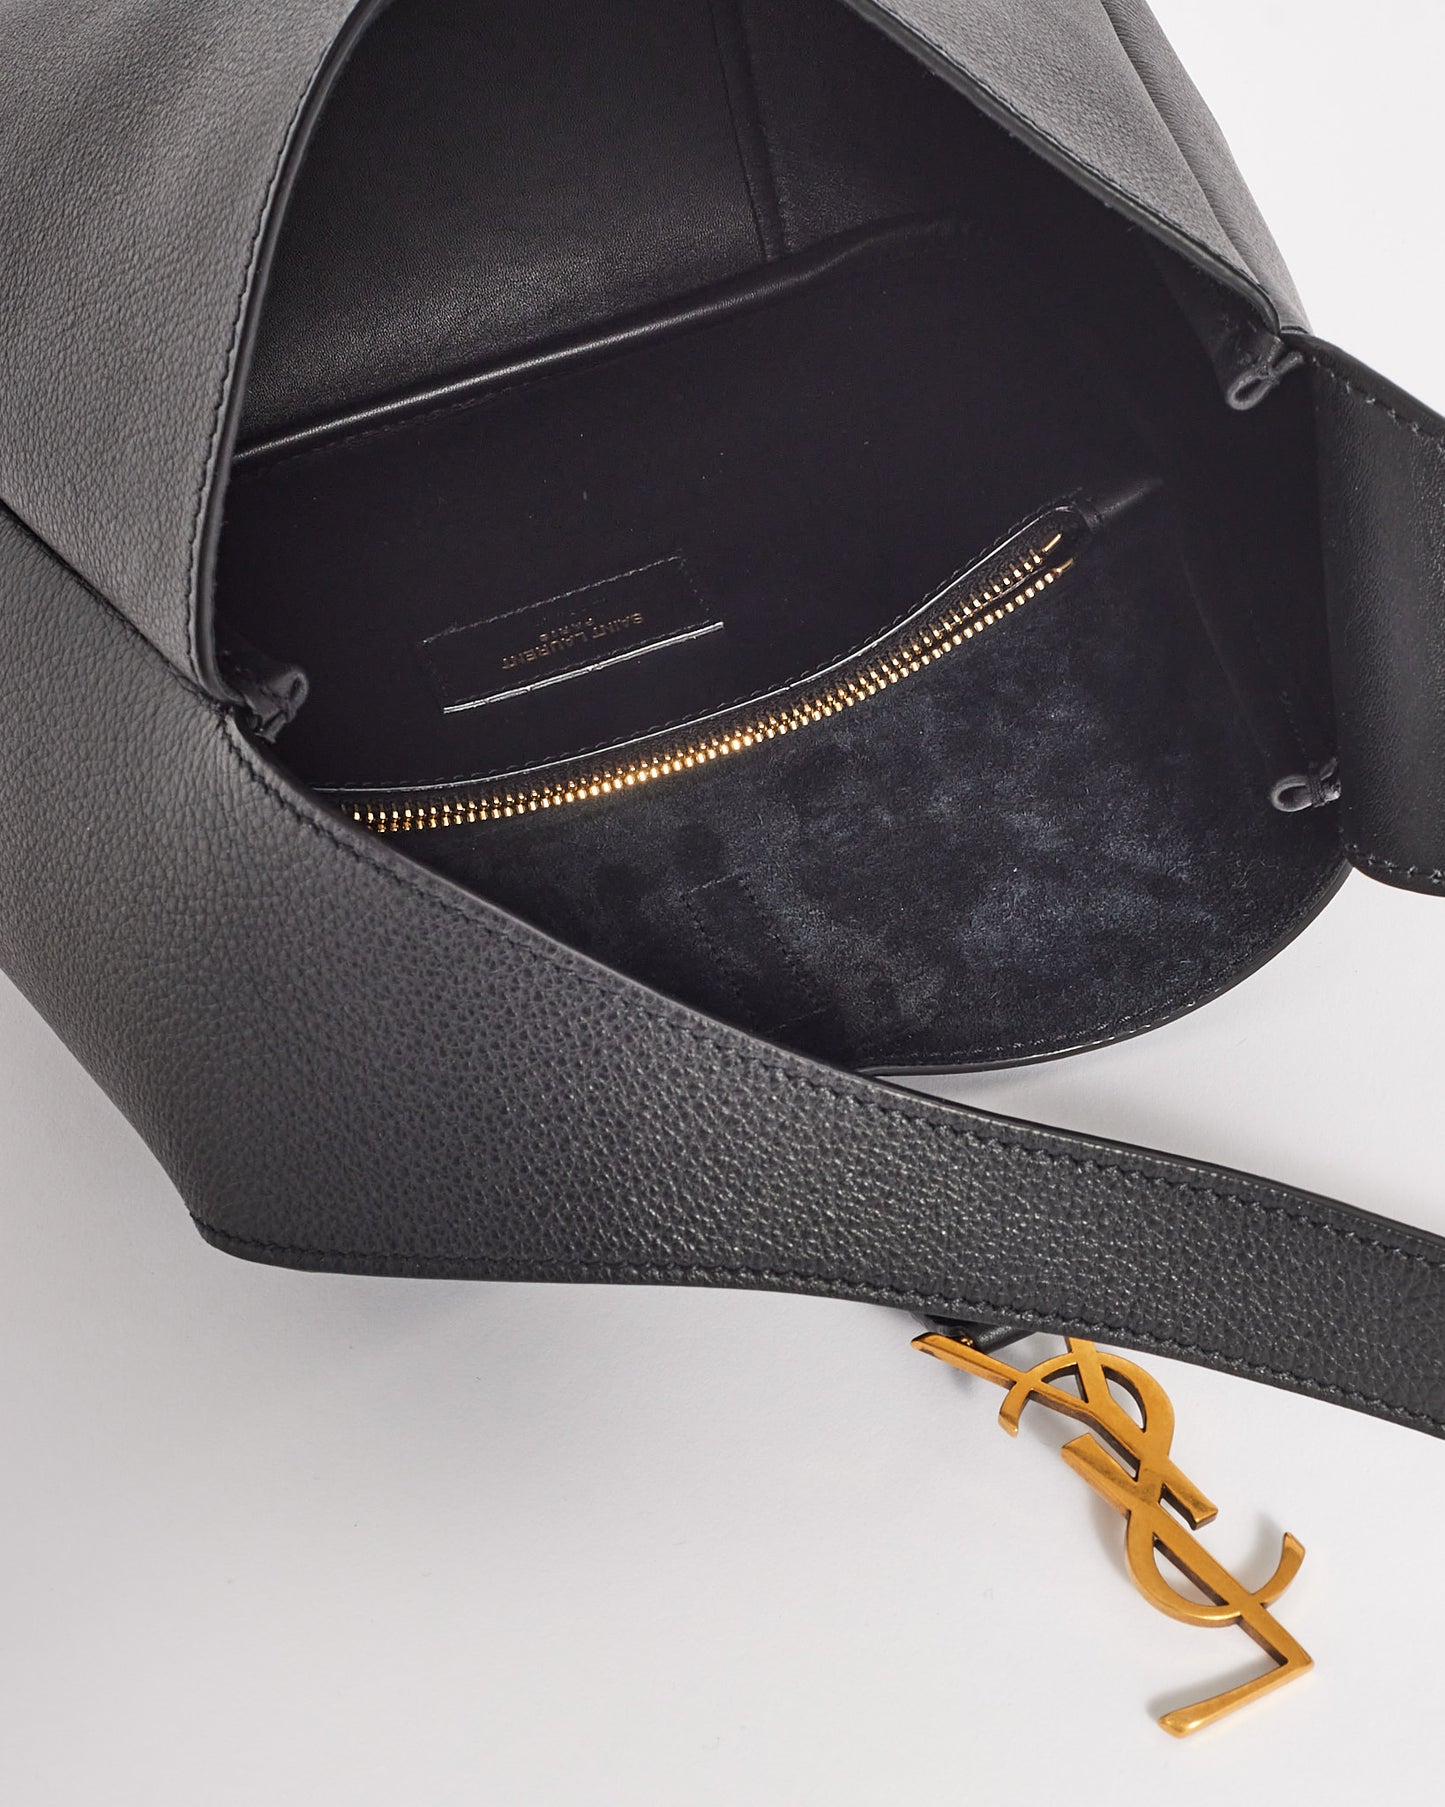 Saint Laurent Black Leather 5 à 7 Small Cassandra Hobo Bag